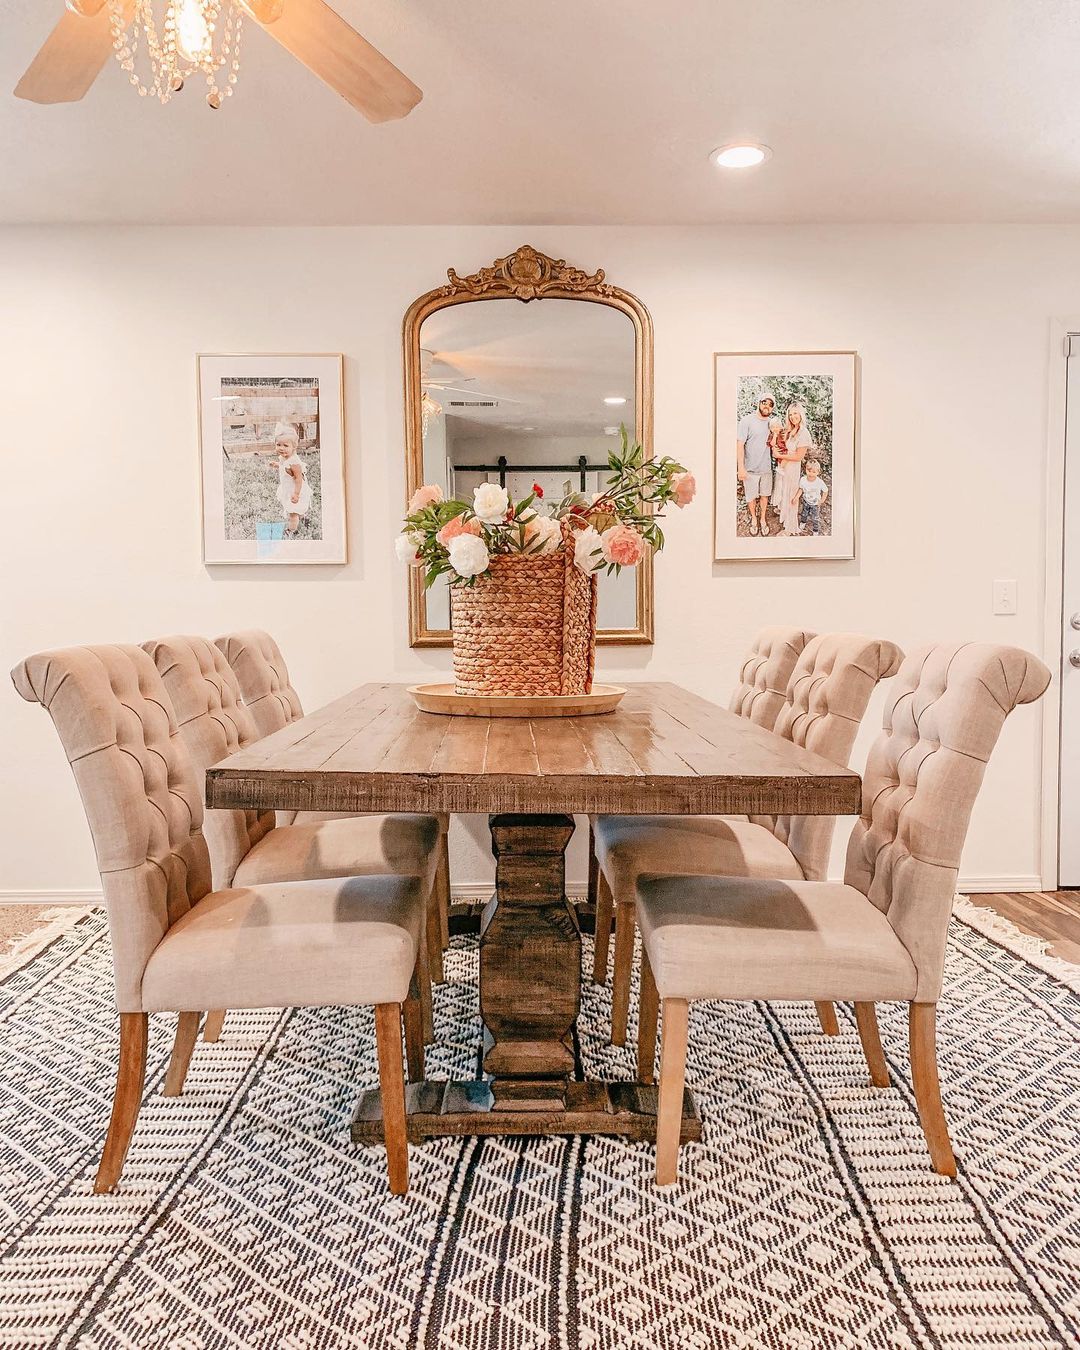 Dining Room Designed by Fancy Fix Decor. Photo by Instagram user @fancyfixdecor